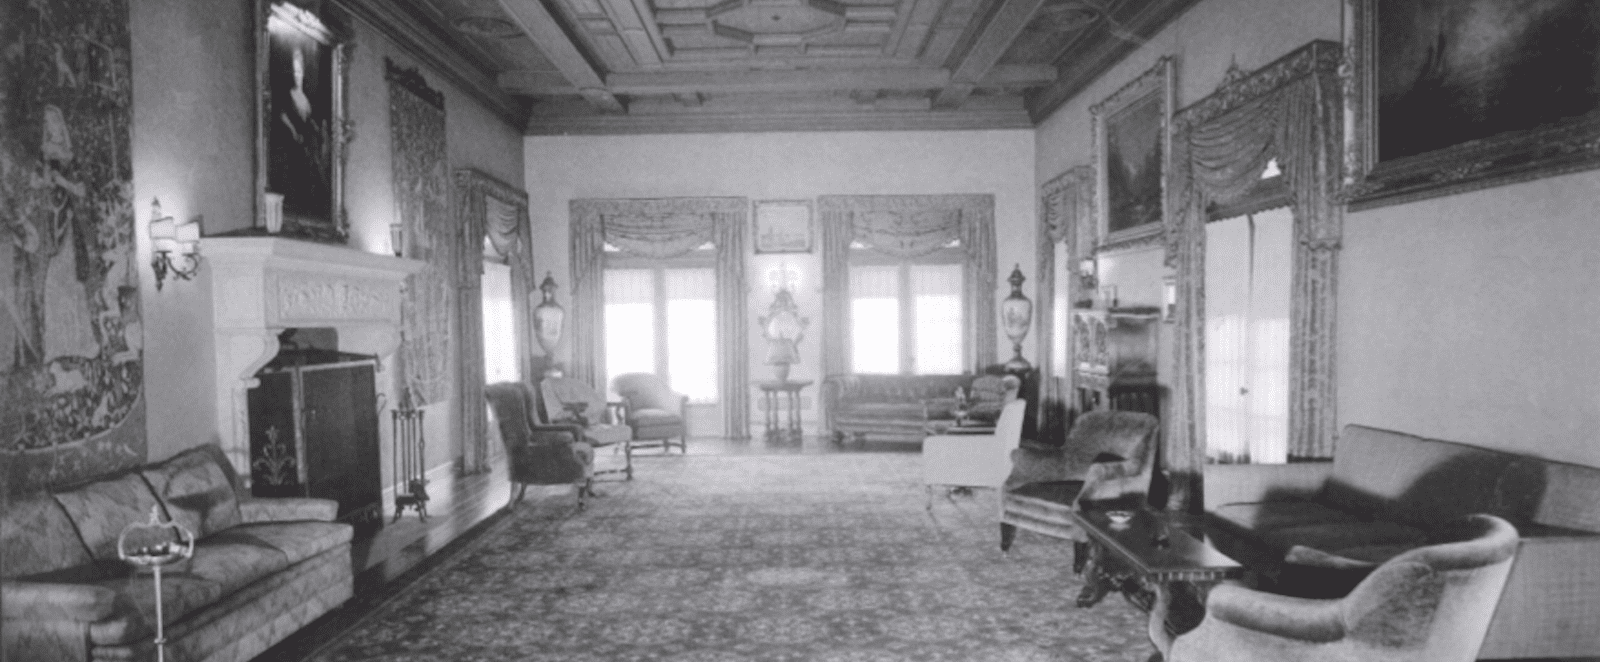 Mansion Living Room